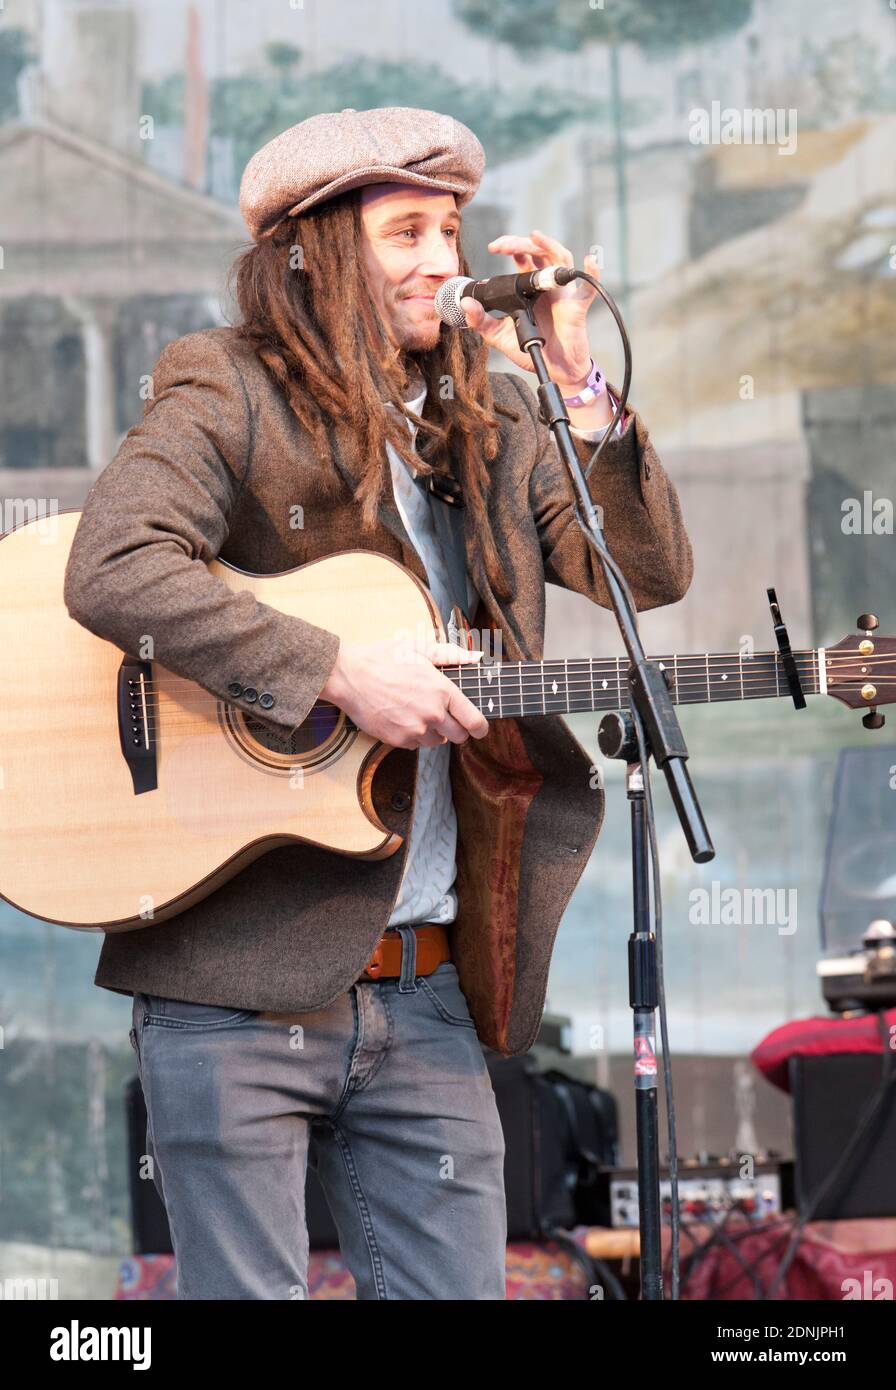 Manchester based musician JP Cooper performing at the Larmer Tree festival, UK Stock Photo